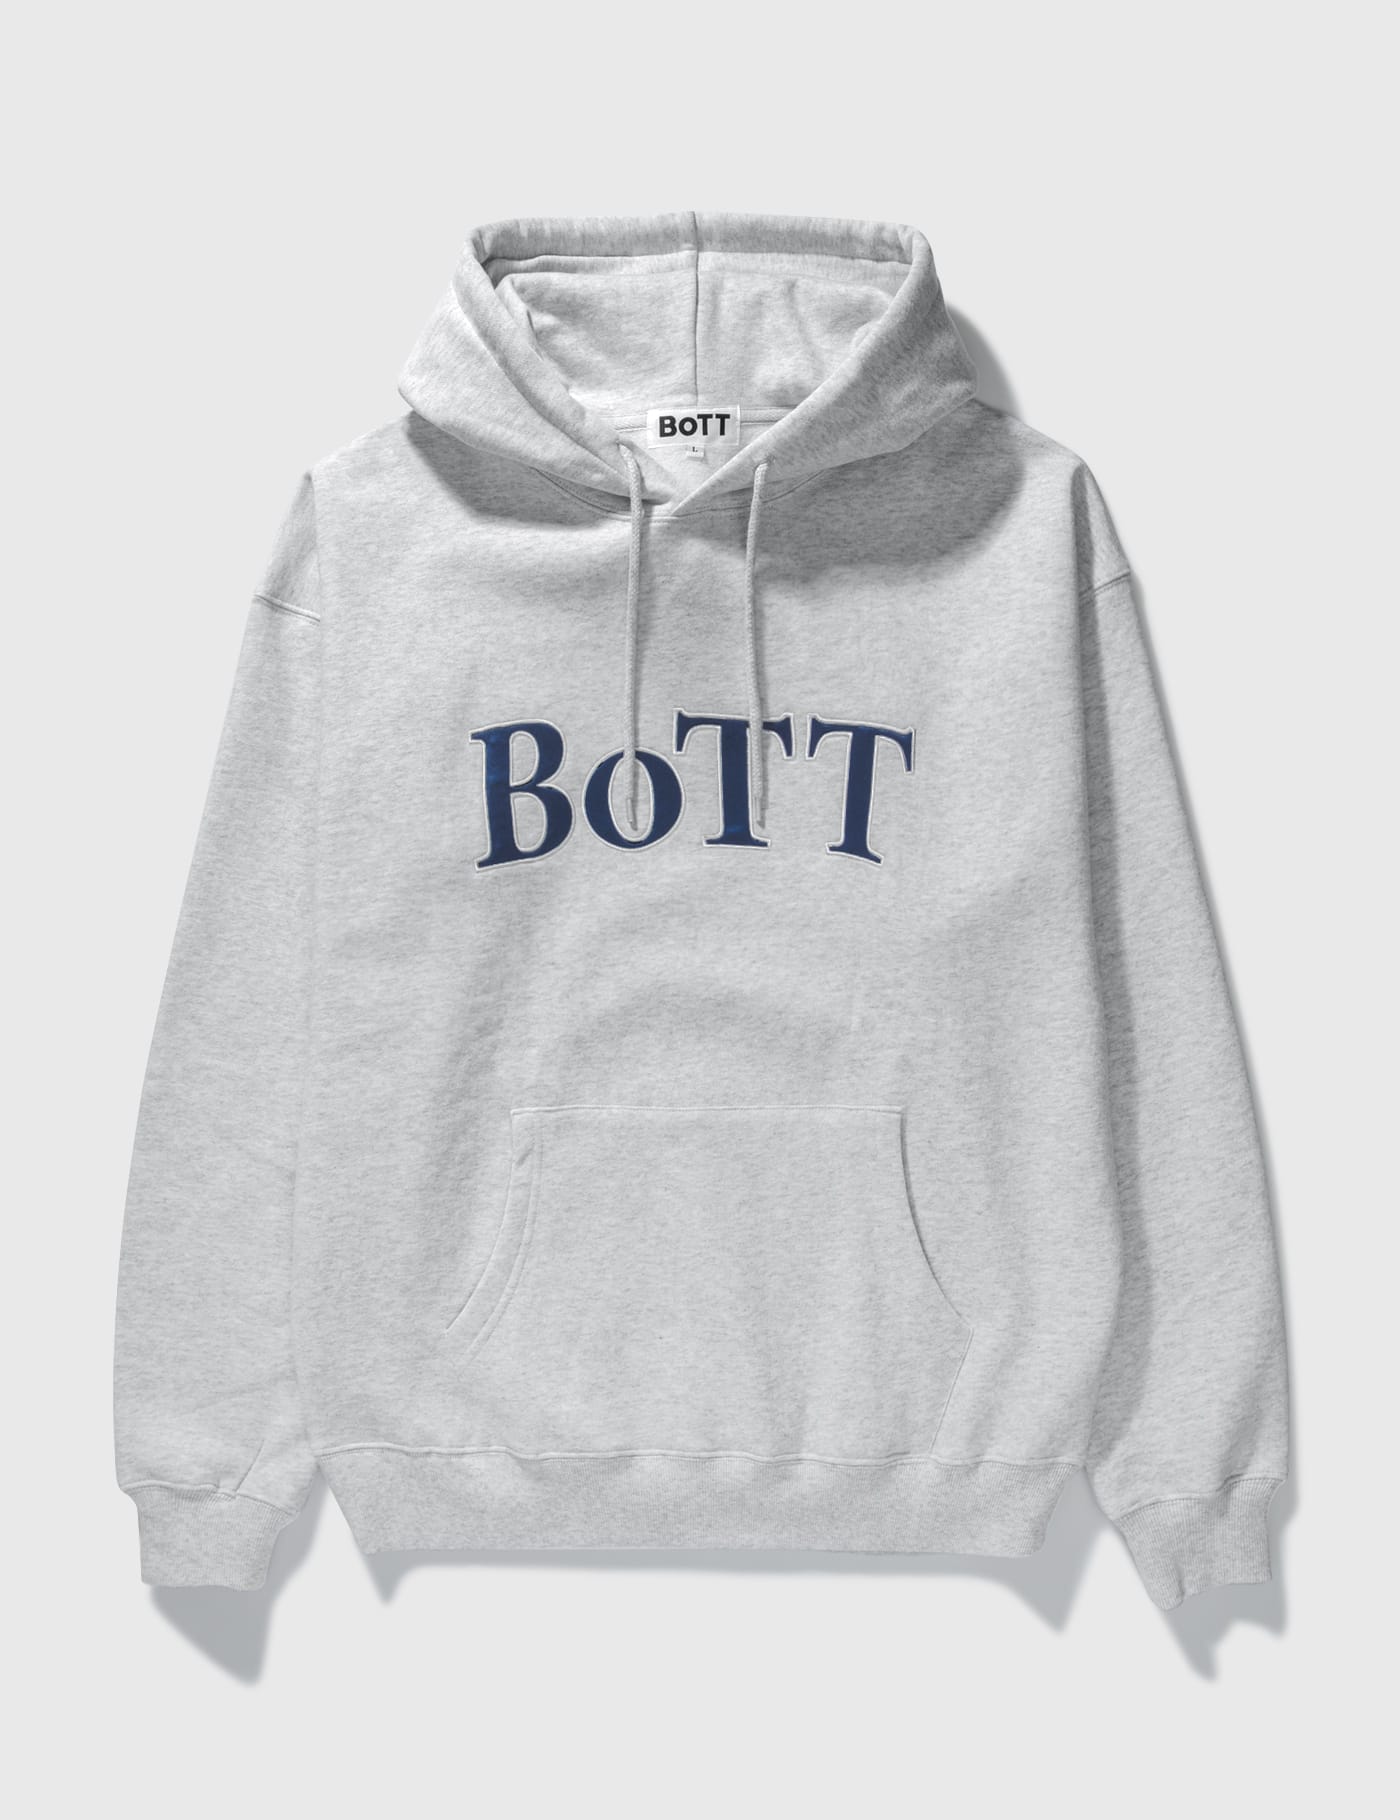 BoTT - BoTT OG Logo Hoodie | HBX - Globally Curated Fashion and ...